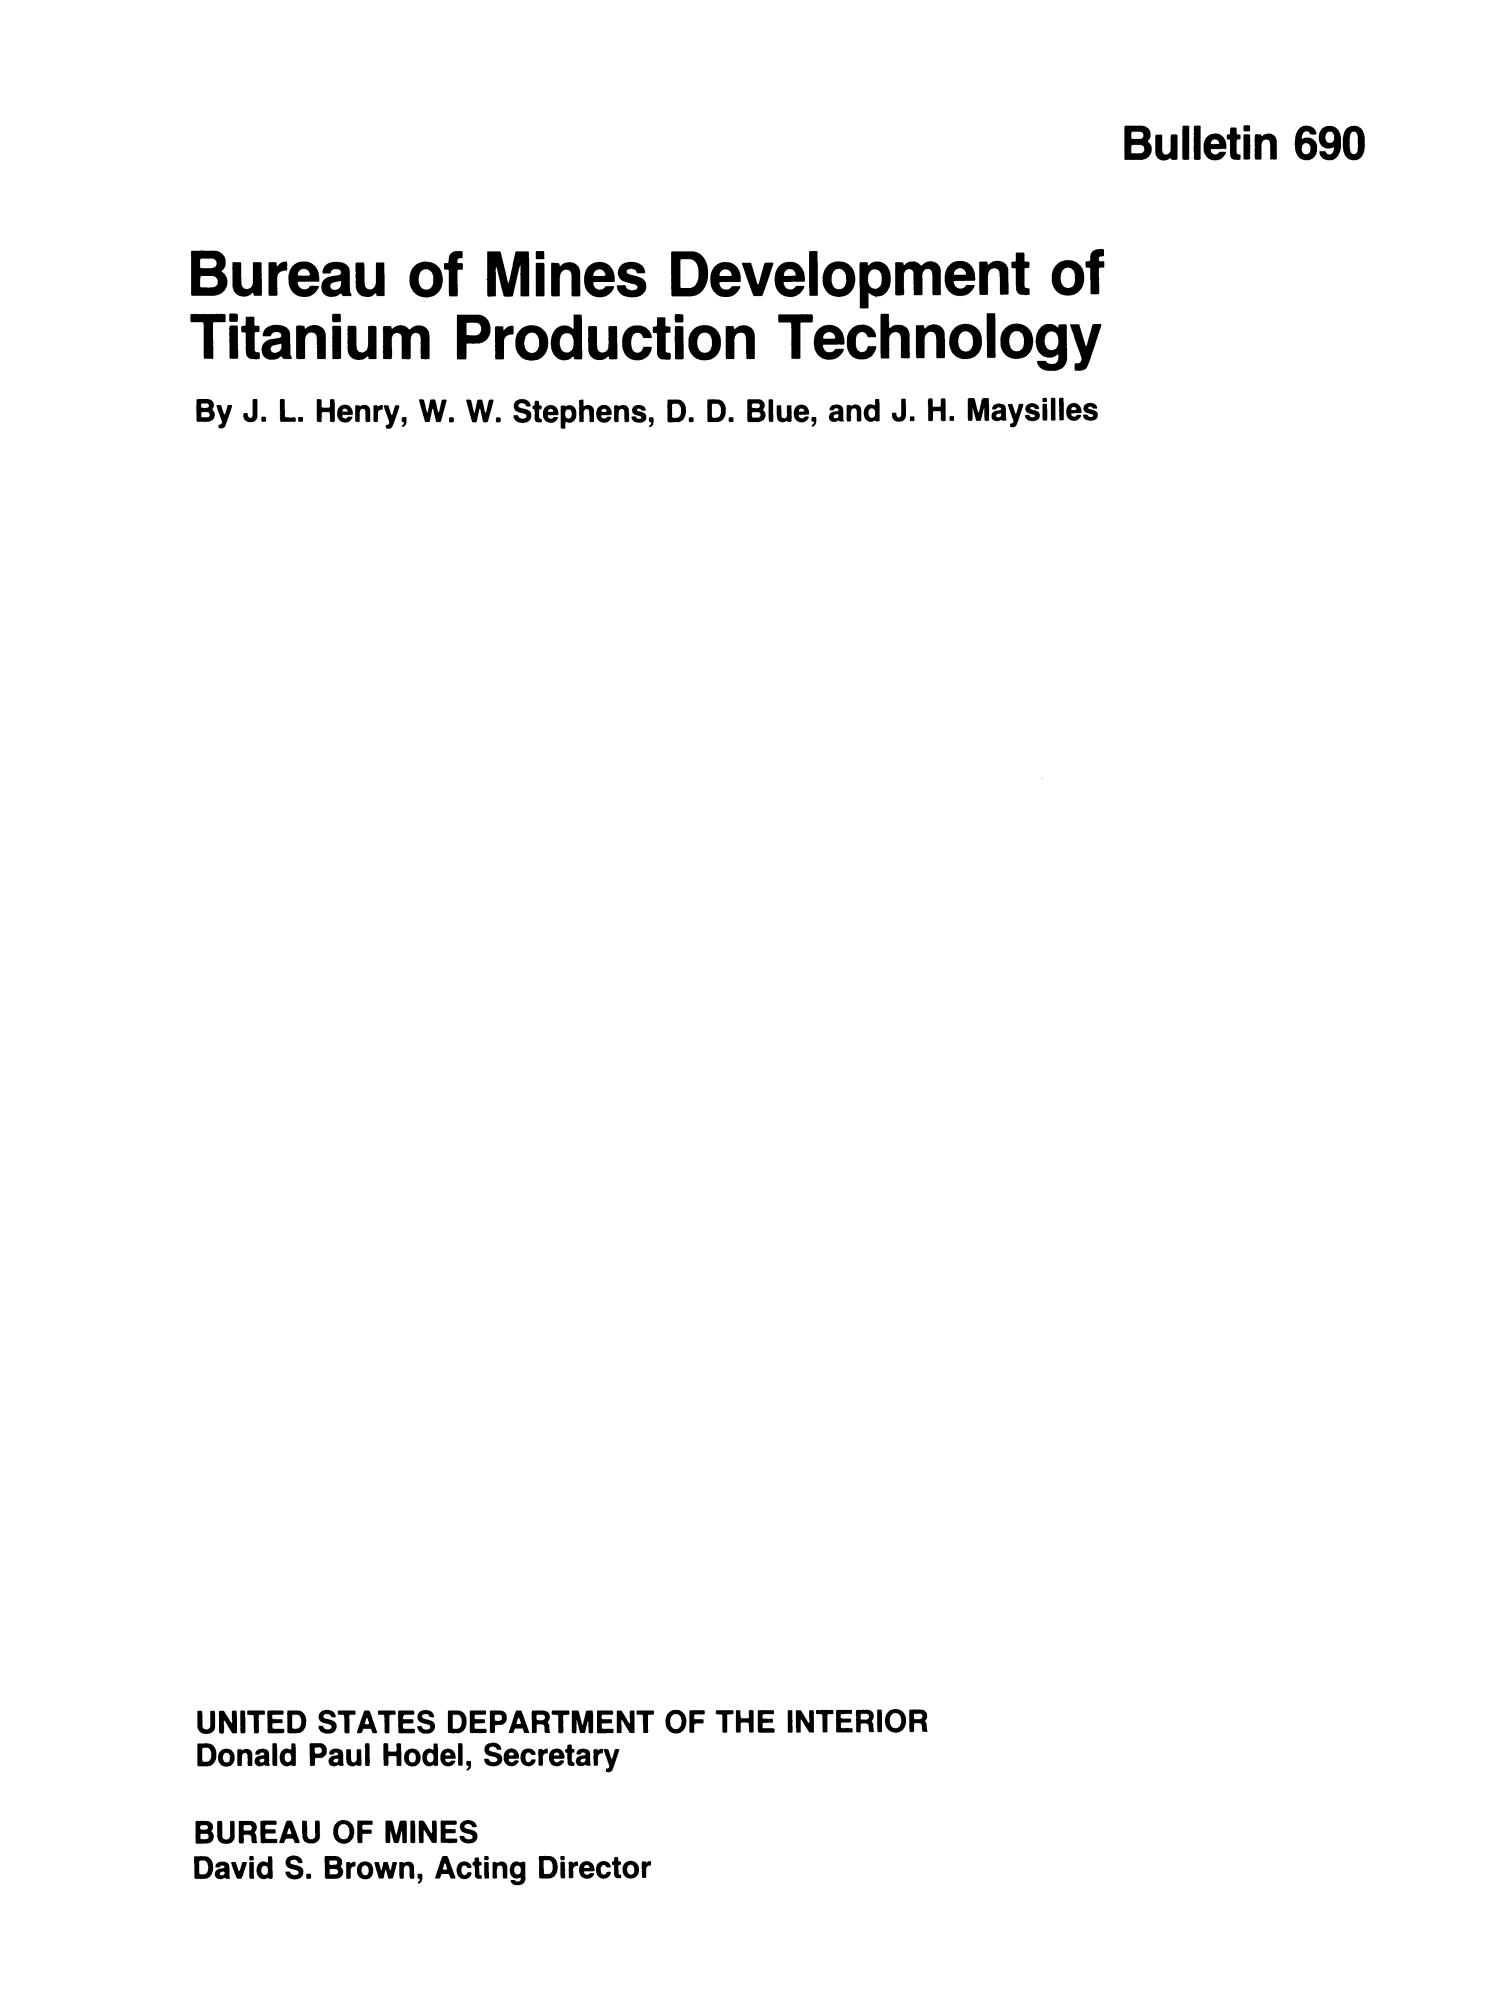 Bureau of Mines Development of Titanium Production Technology
                                                
                                                    I
                                                